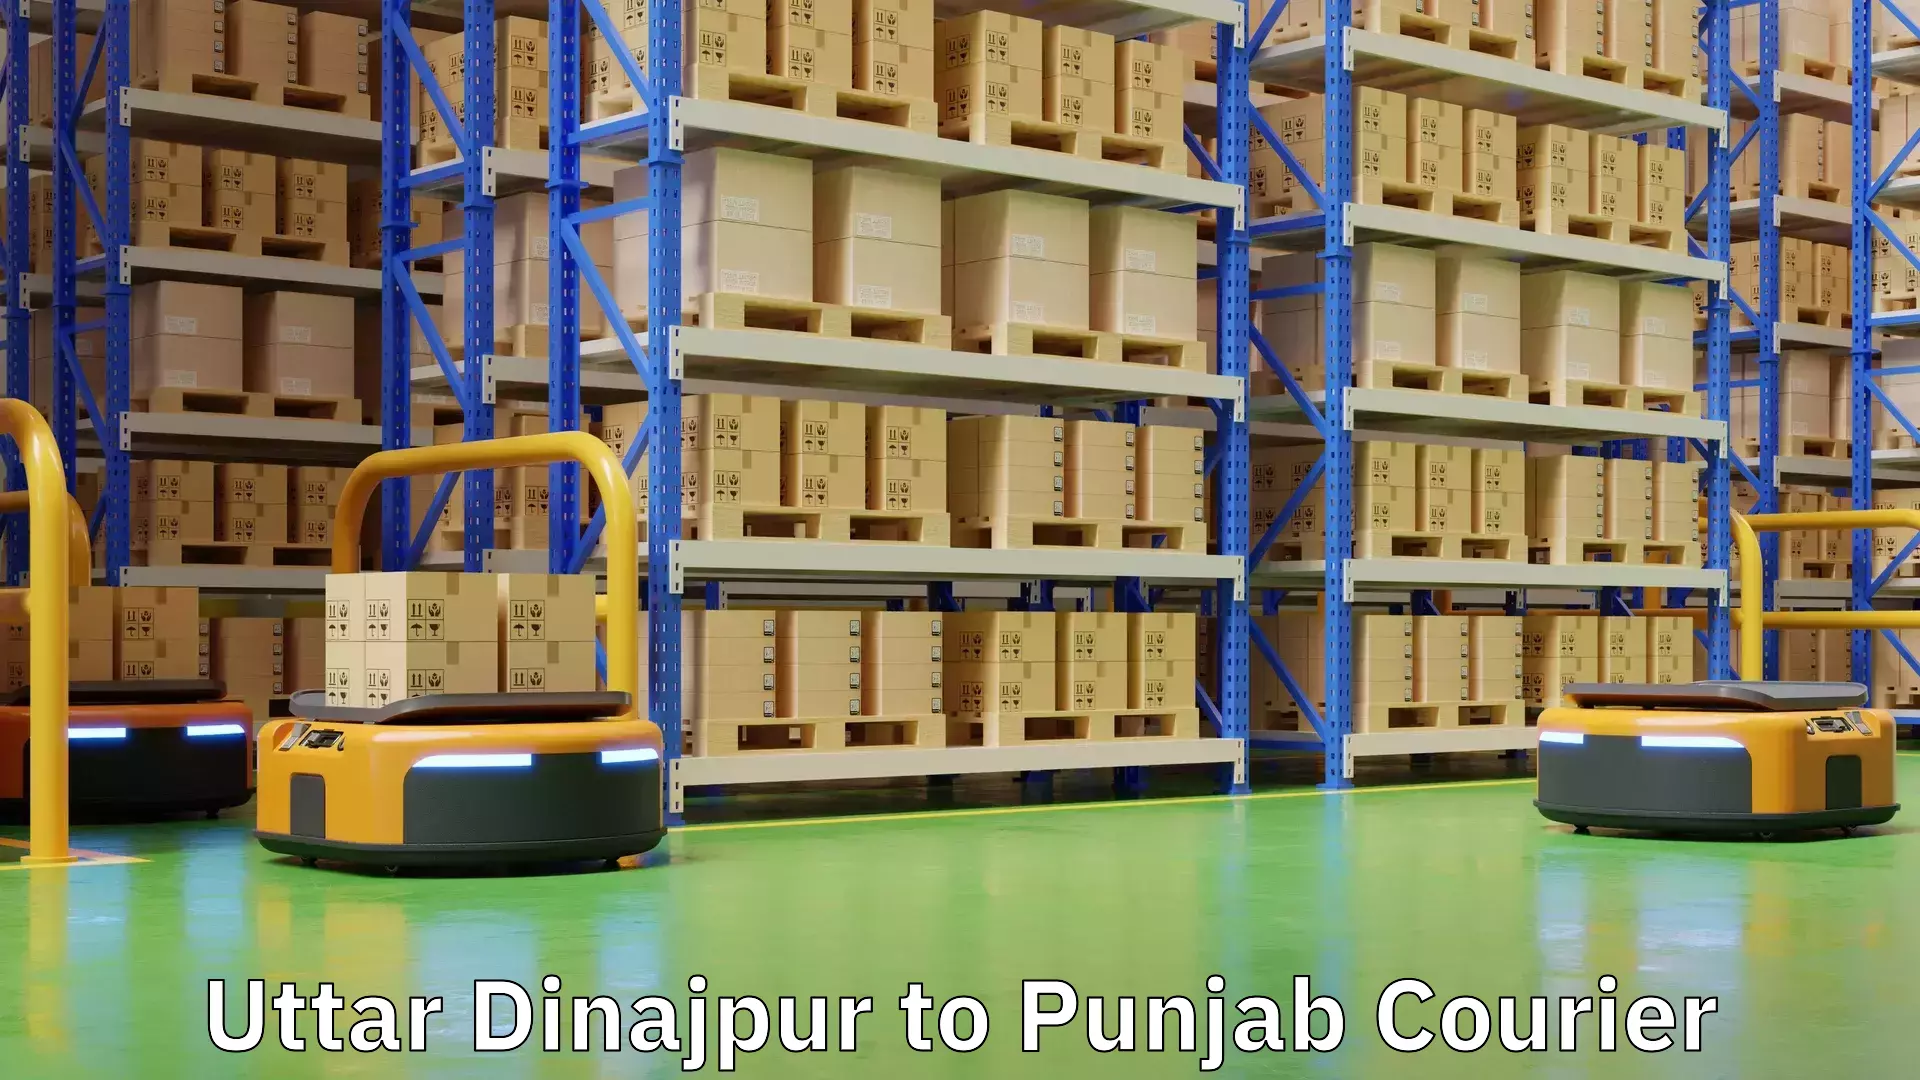 Advanced courier platforms in Uttar Dinajpur to Punjab